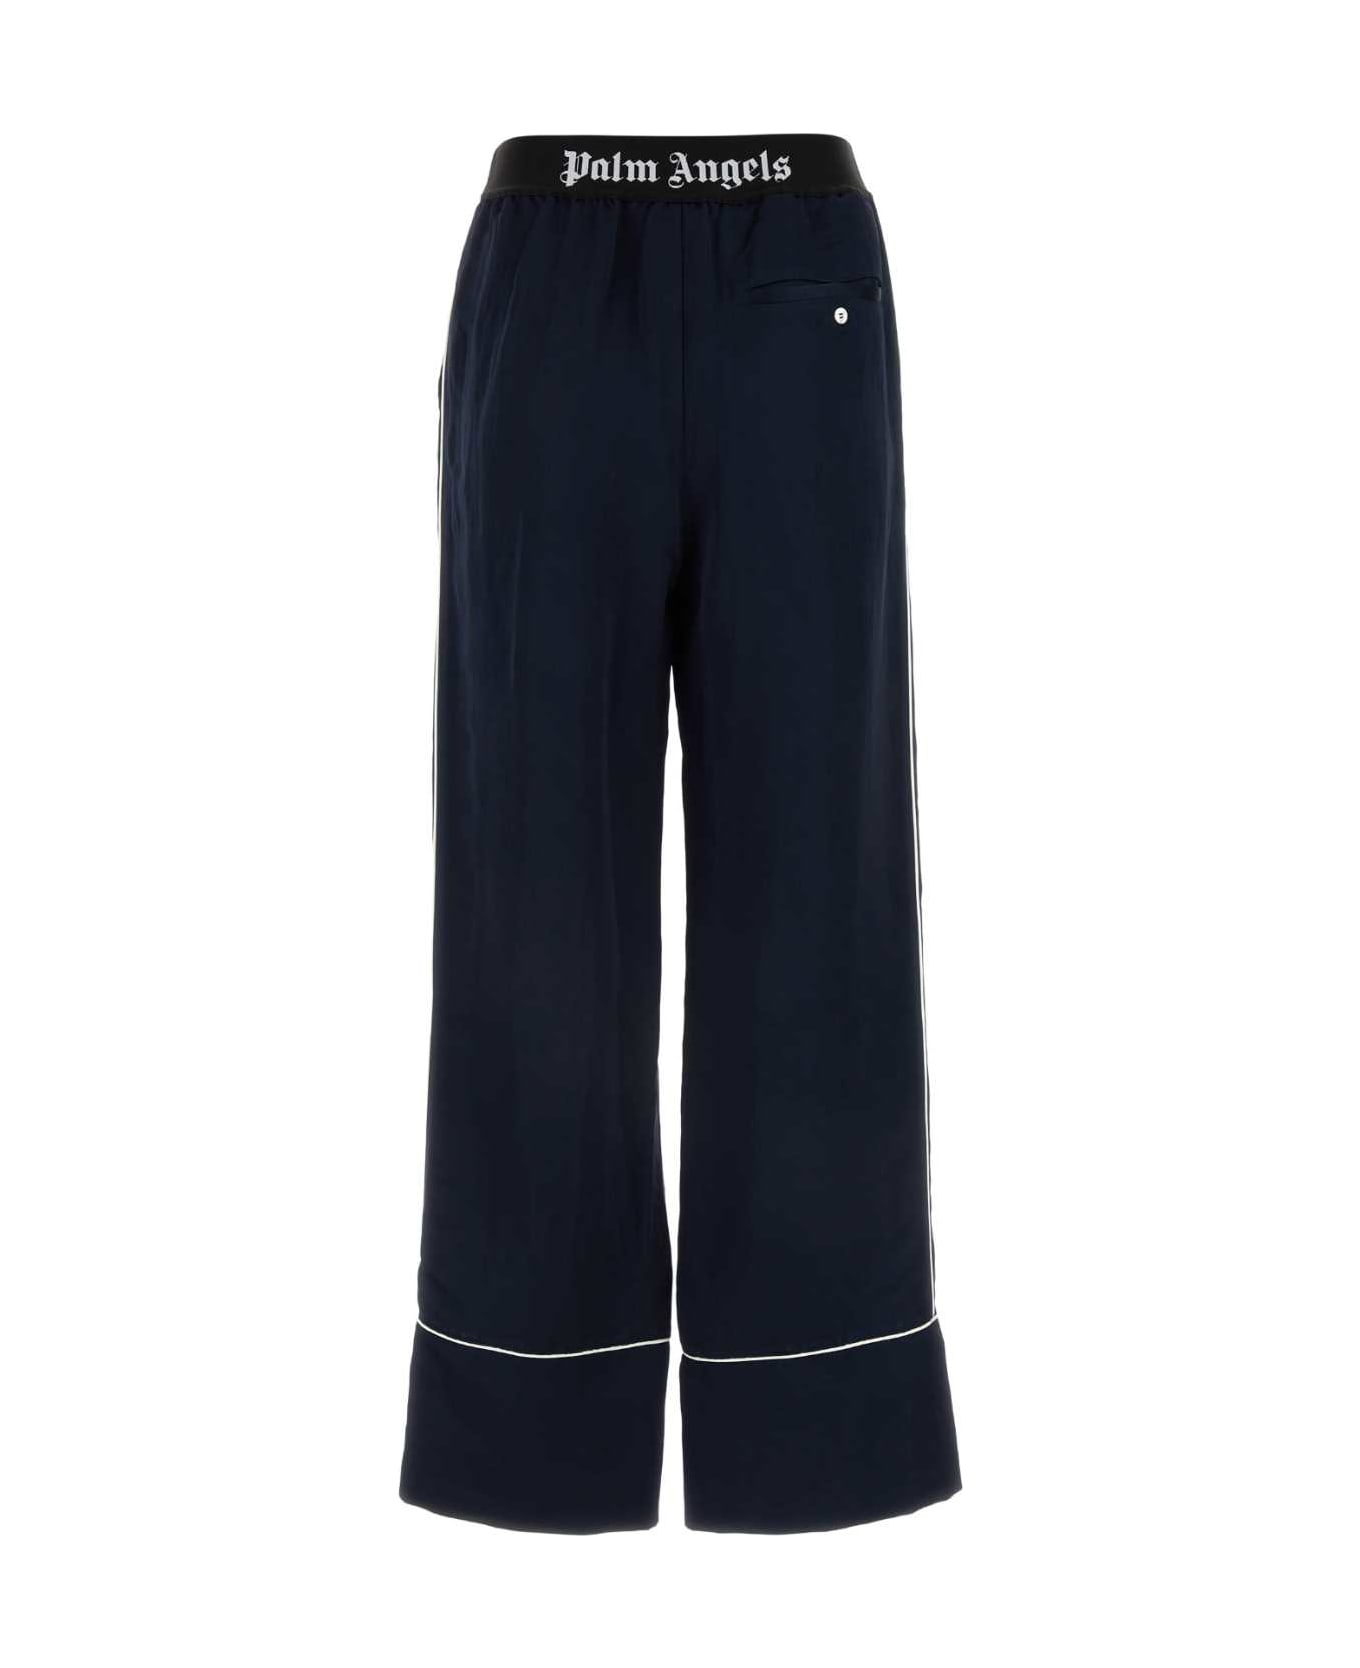 Palm Angels Navy Blue Satin Pyjama Pant - NAVYBLUEBLACK